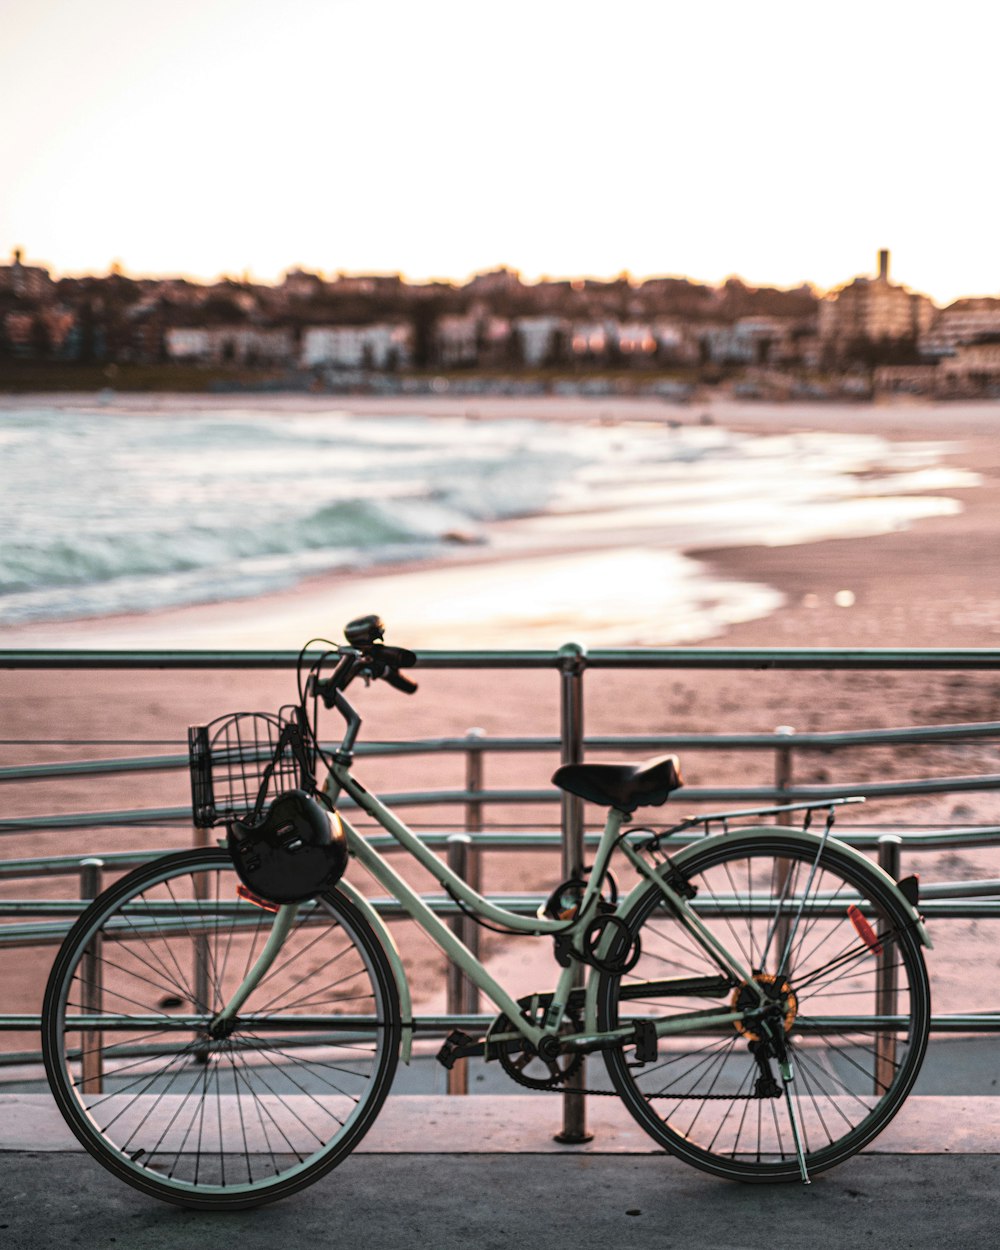 black city bike on beach during daytime